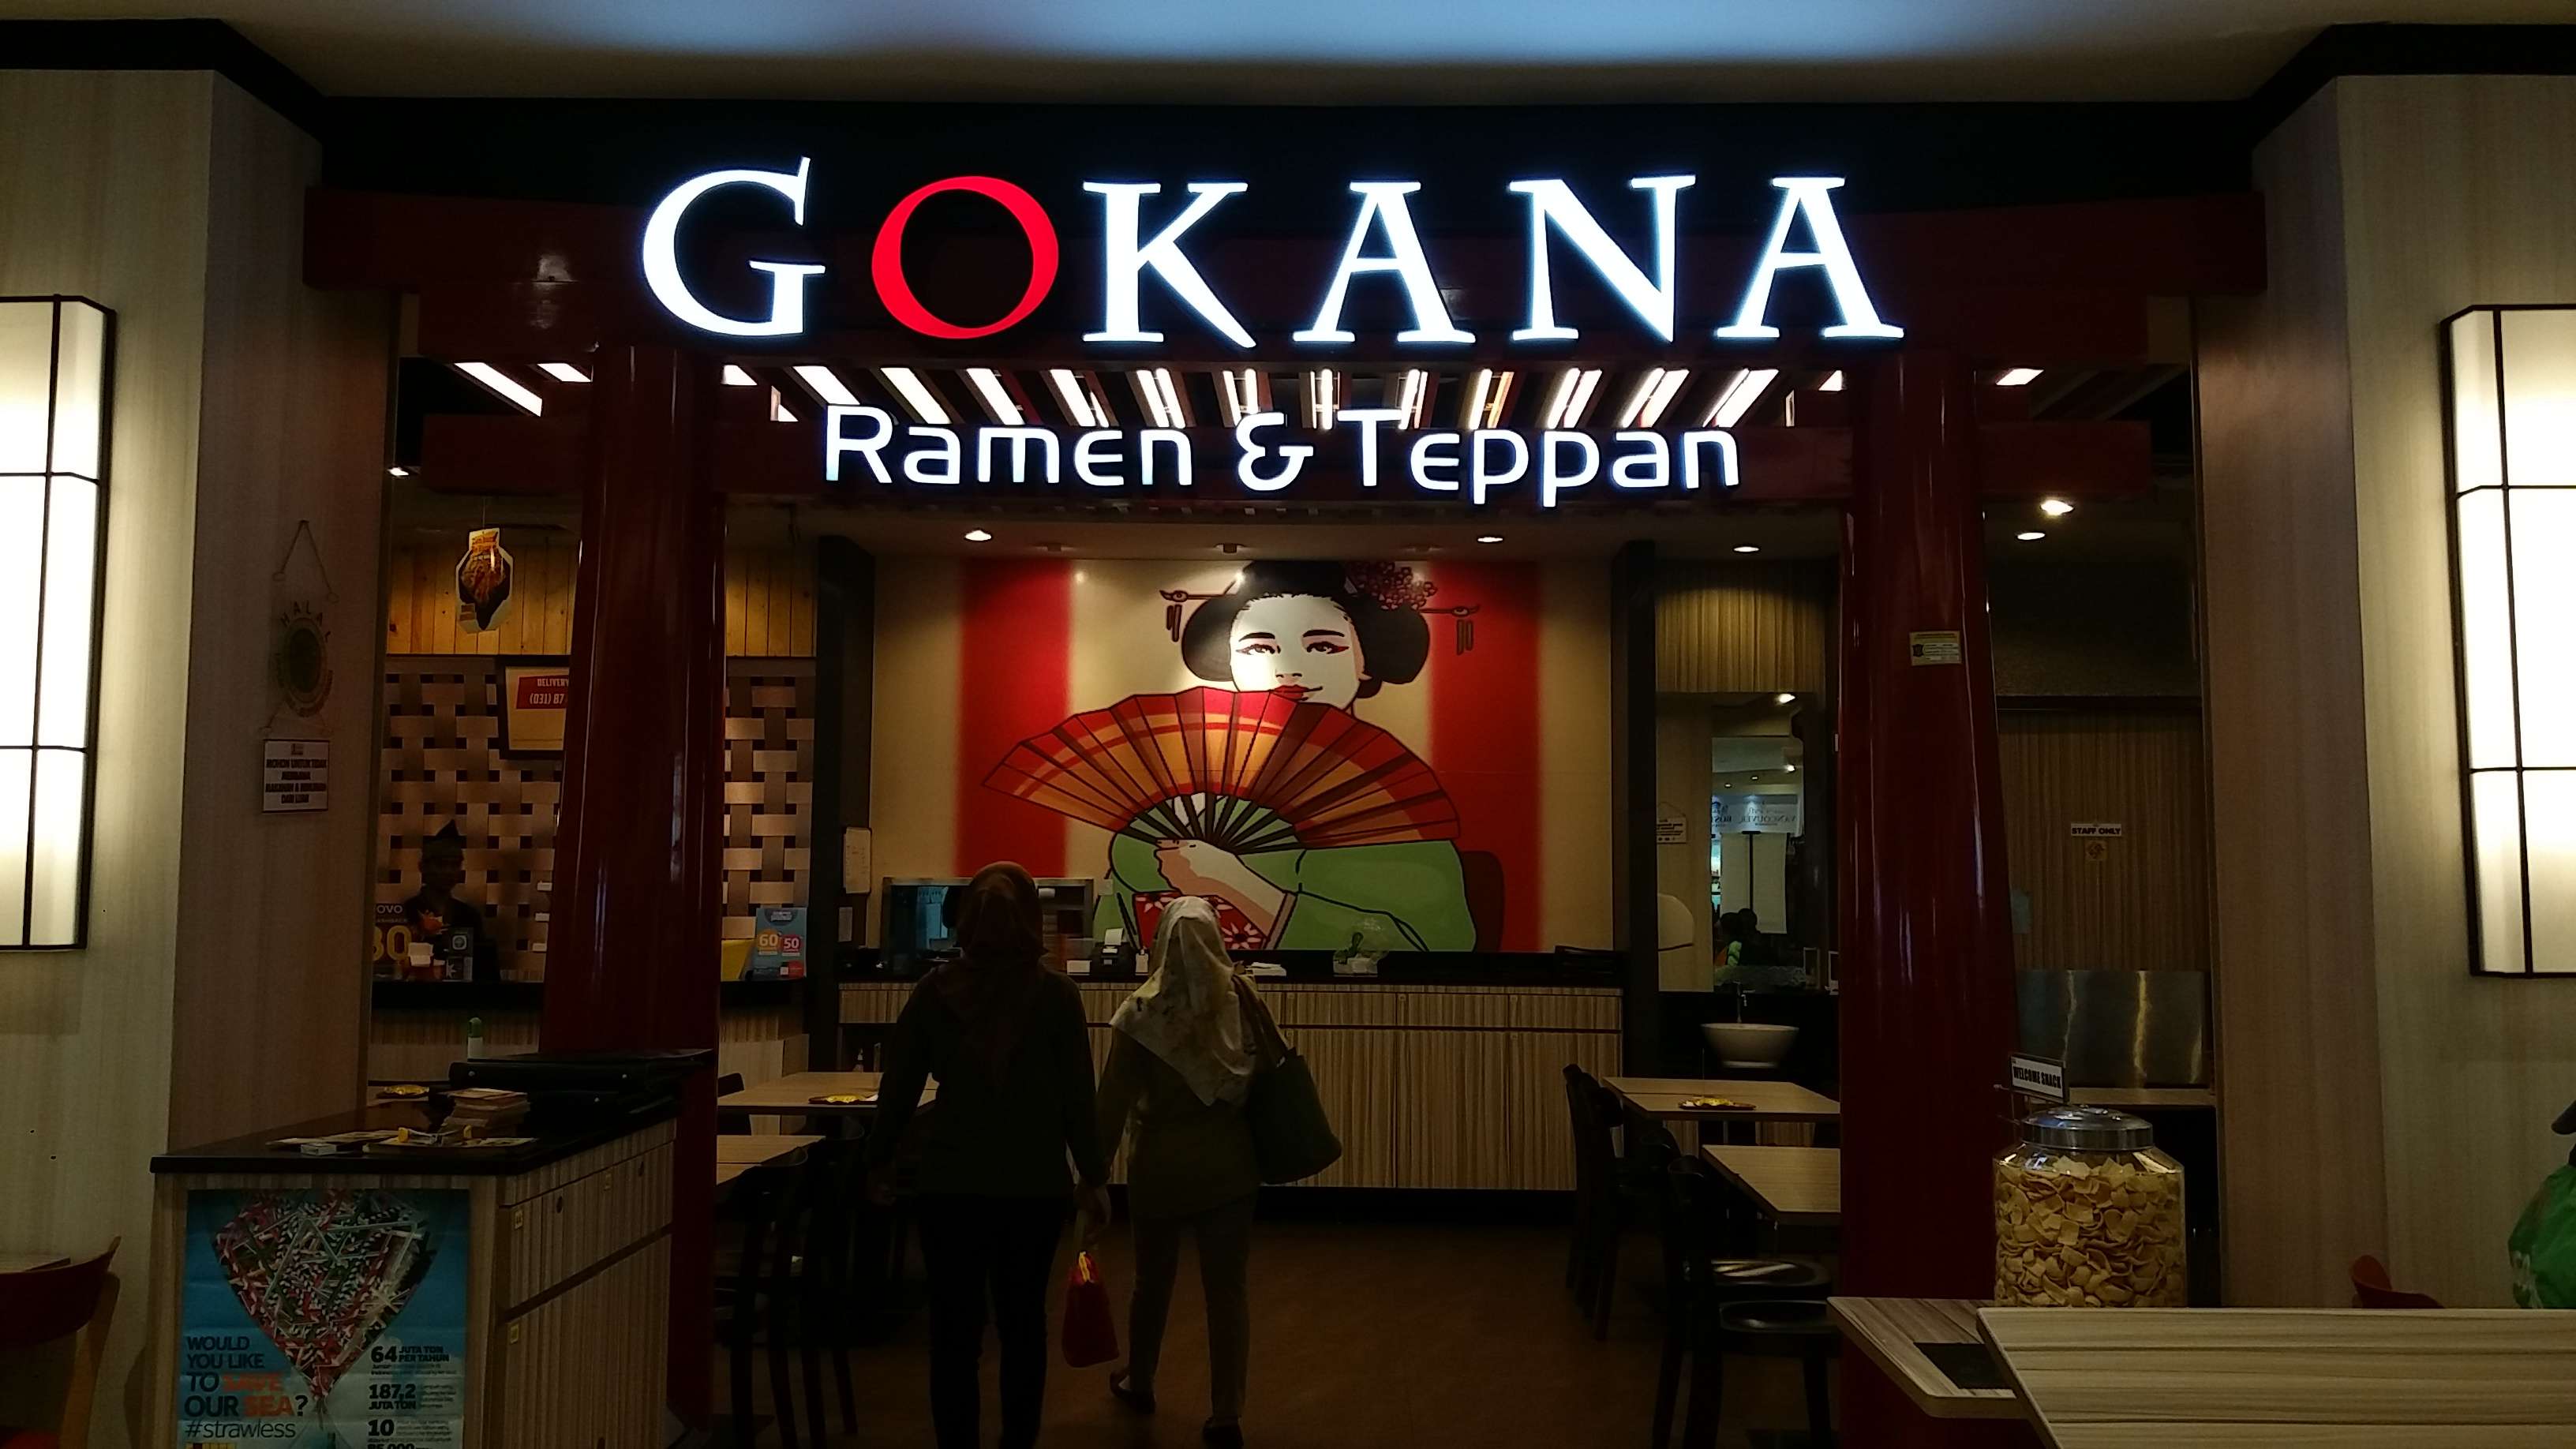 Gokana Ramen &Teppan (c) Alviani Suwoko/Travelingyuk